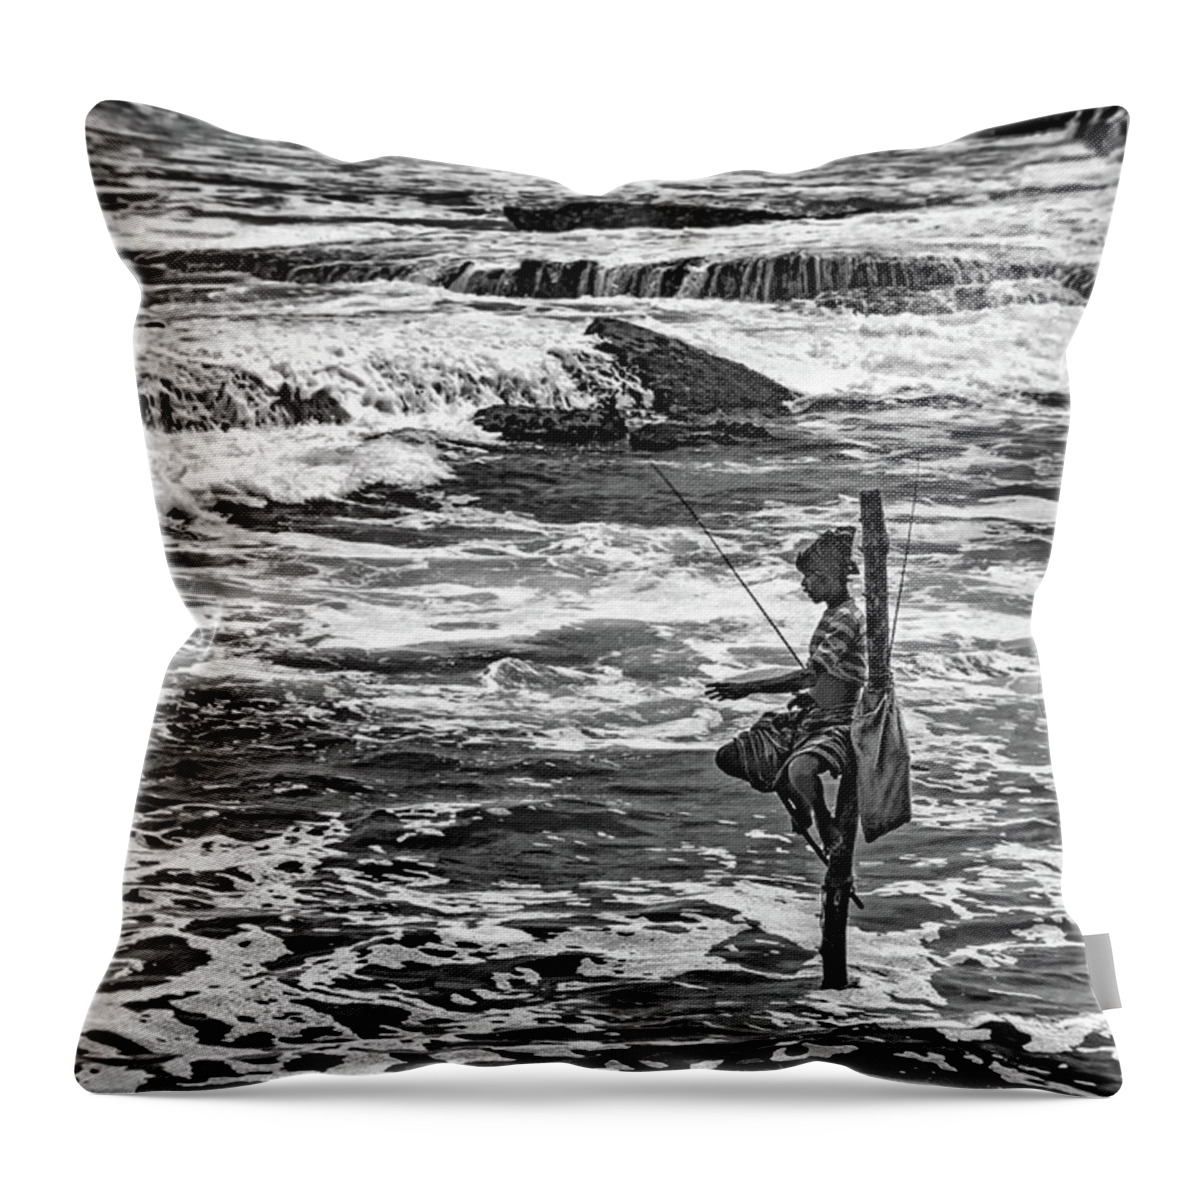 India Throw Pillow featuring the photograph Sri Lanka - Stilt Fisherman 2 bw by Steve Harrington